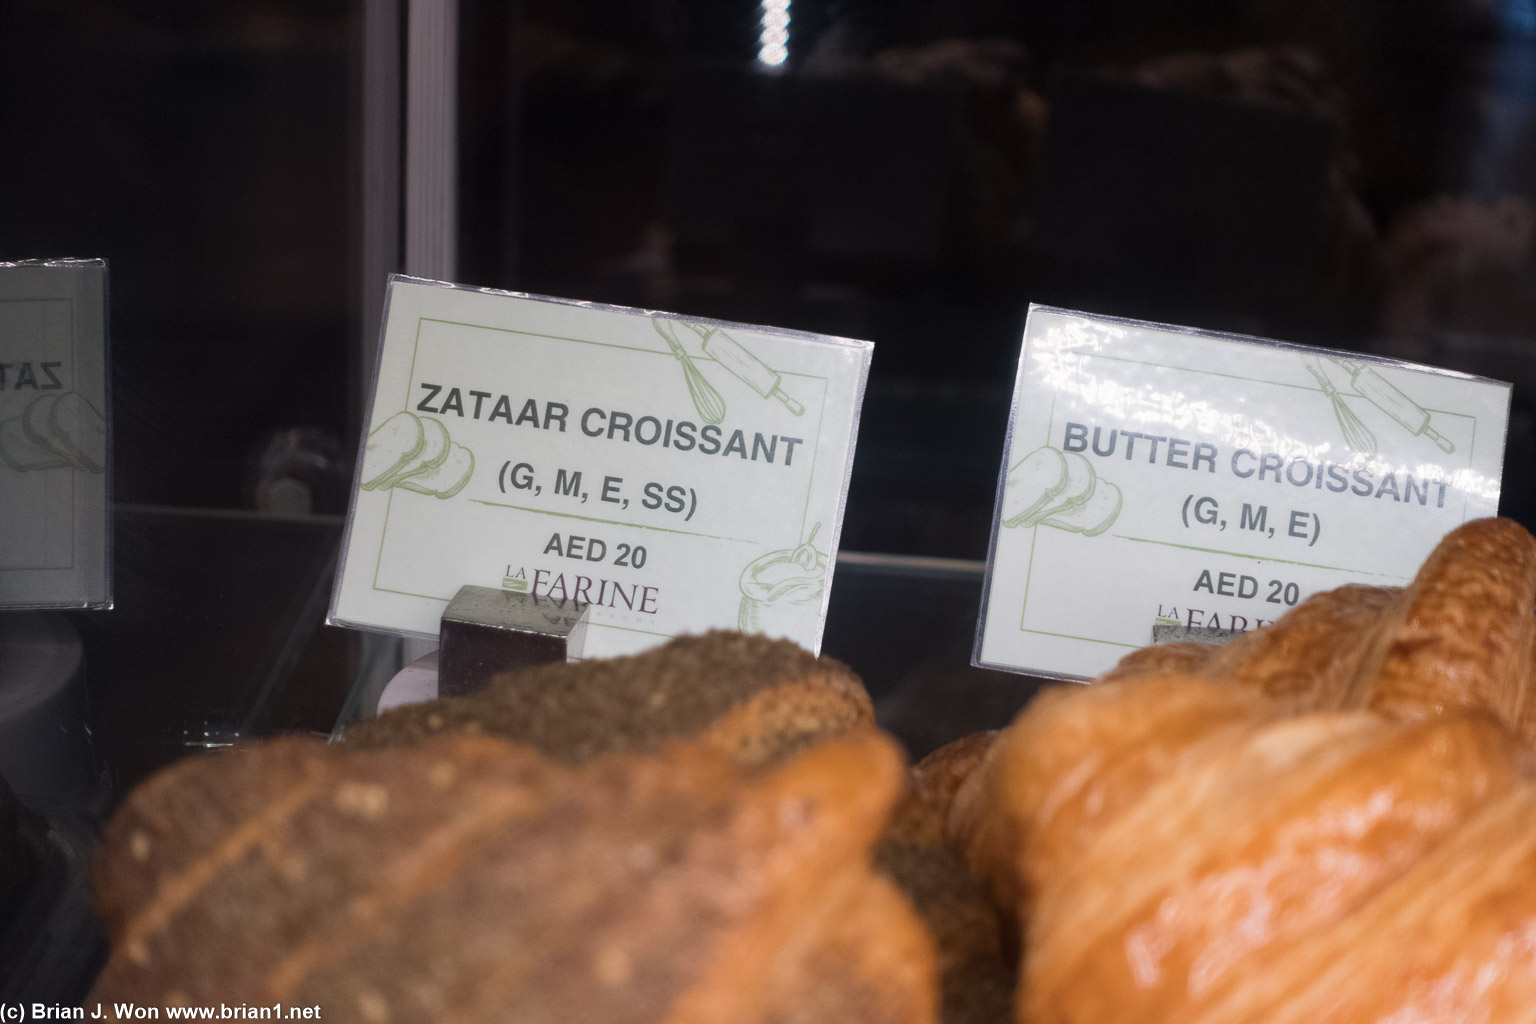 Zataar croissant at one of the JW Marriott restaurants.